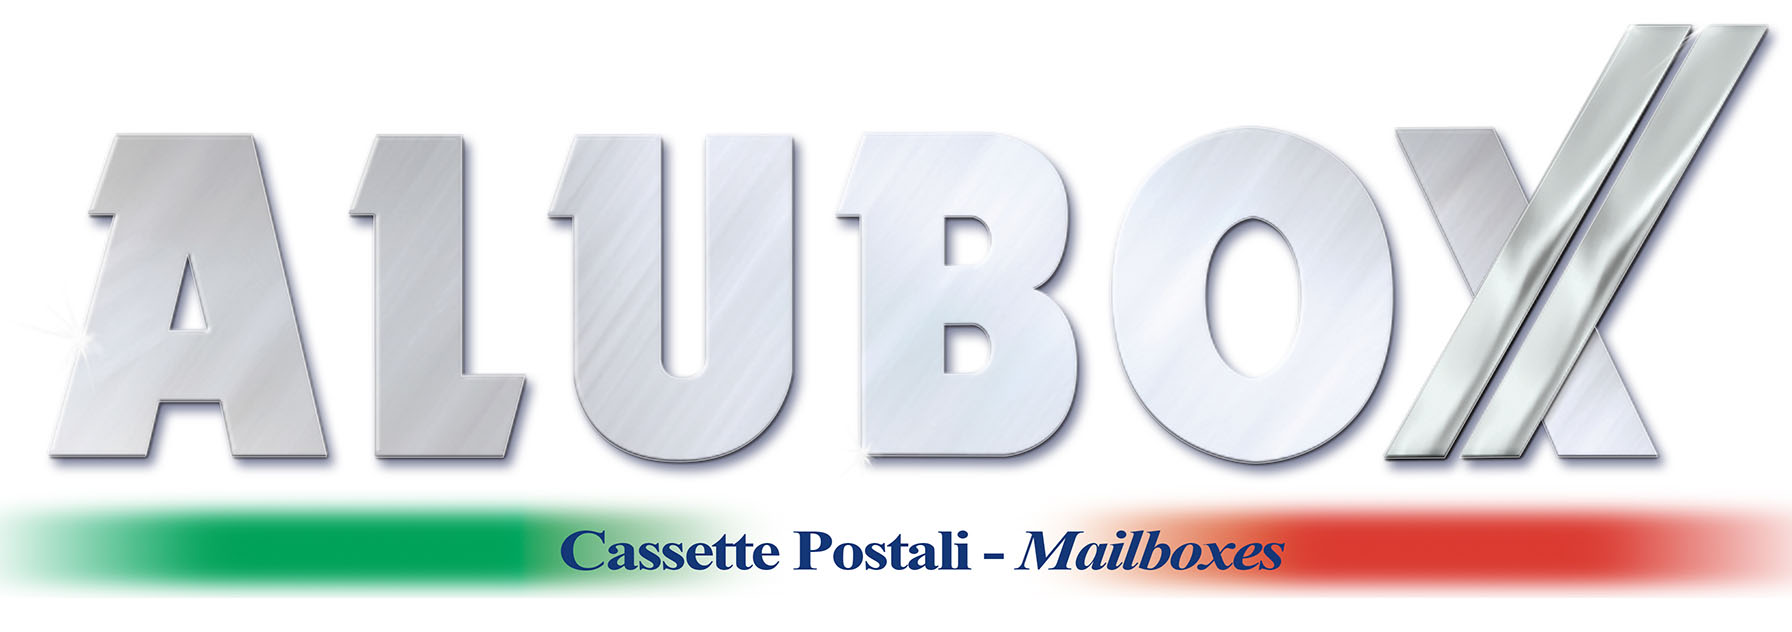 Cassetta Postale Con Vano Portapacchi EasyBox EasyBox» Alubox